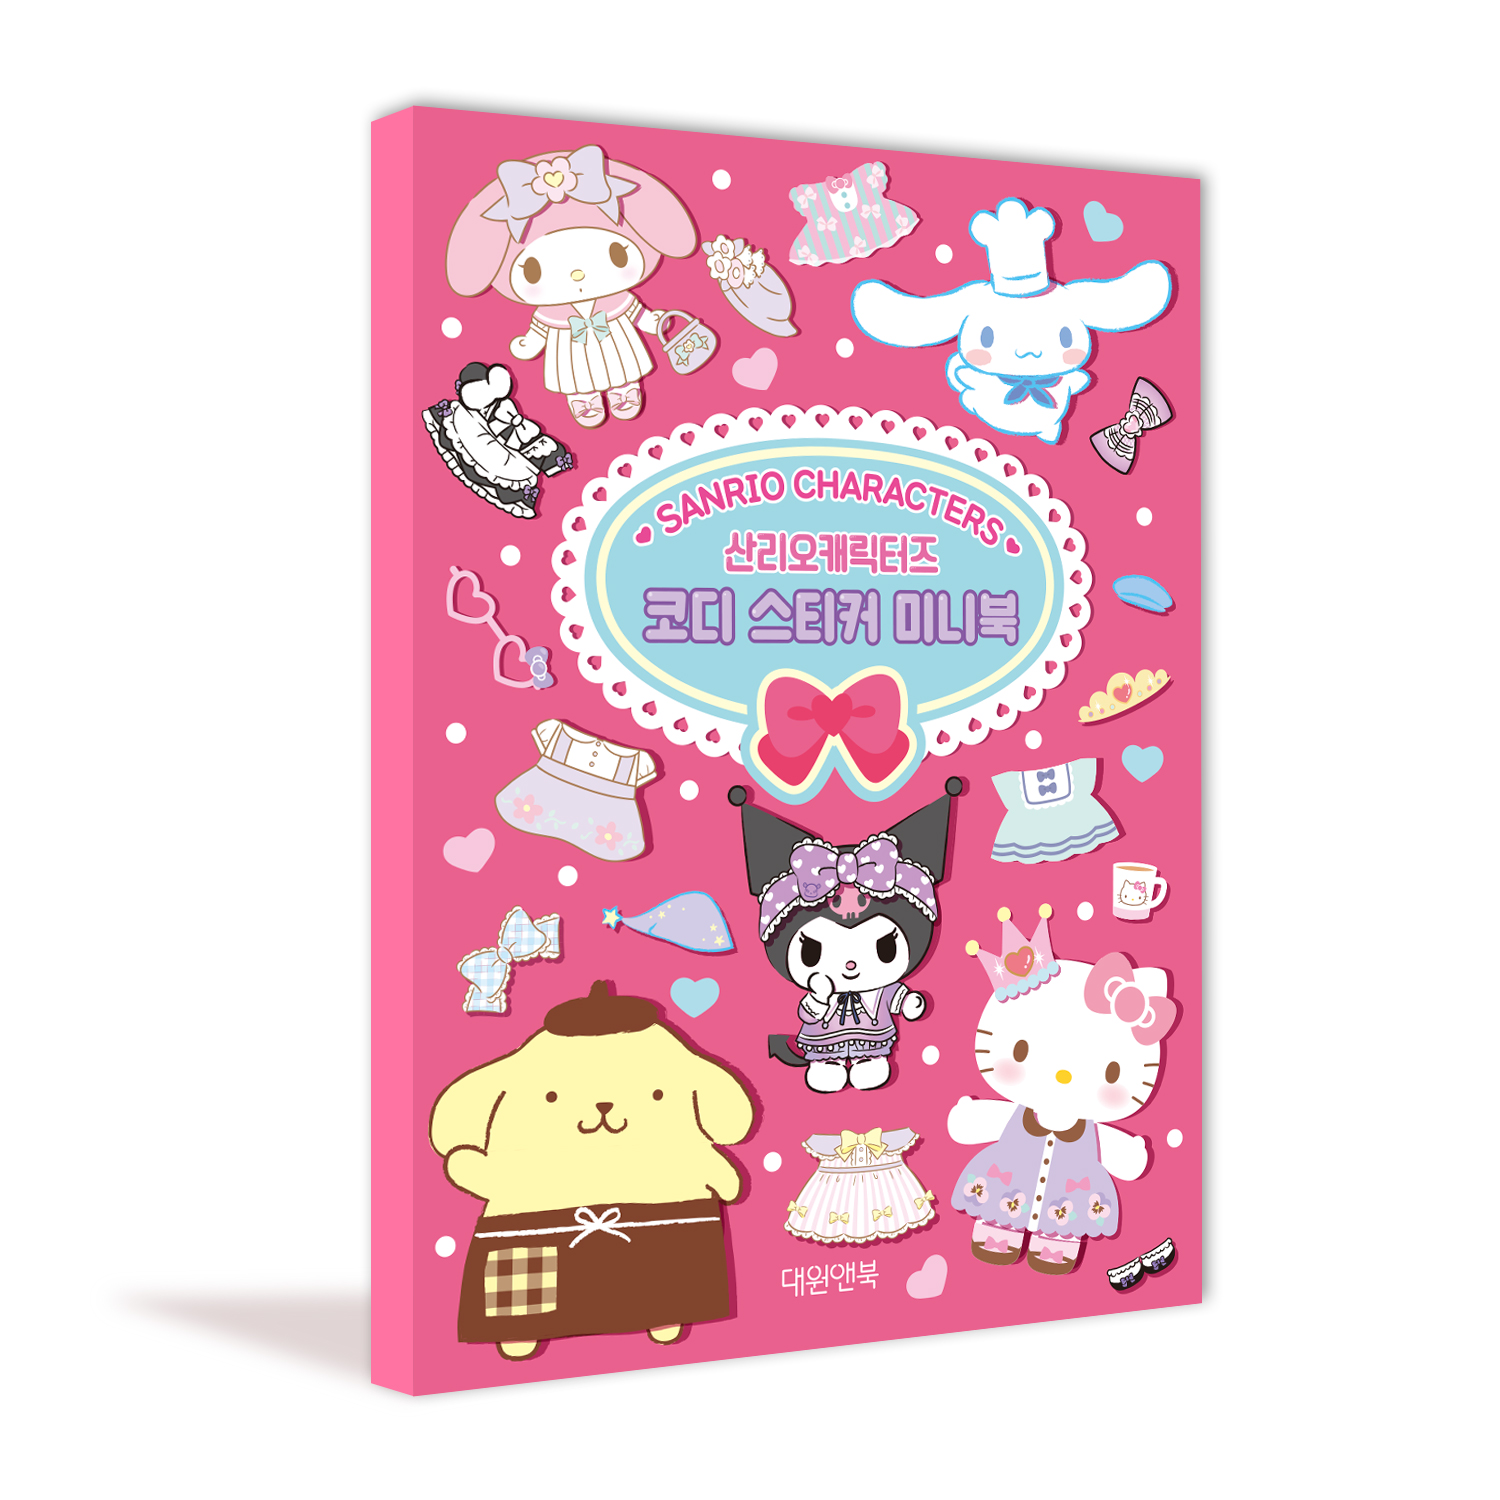 Sanrio Characters Stylist Sticker Mini Book, Renewal